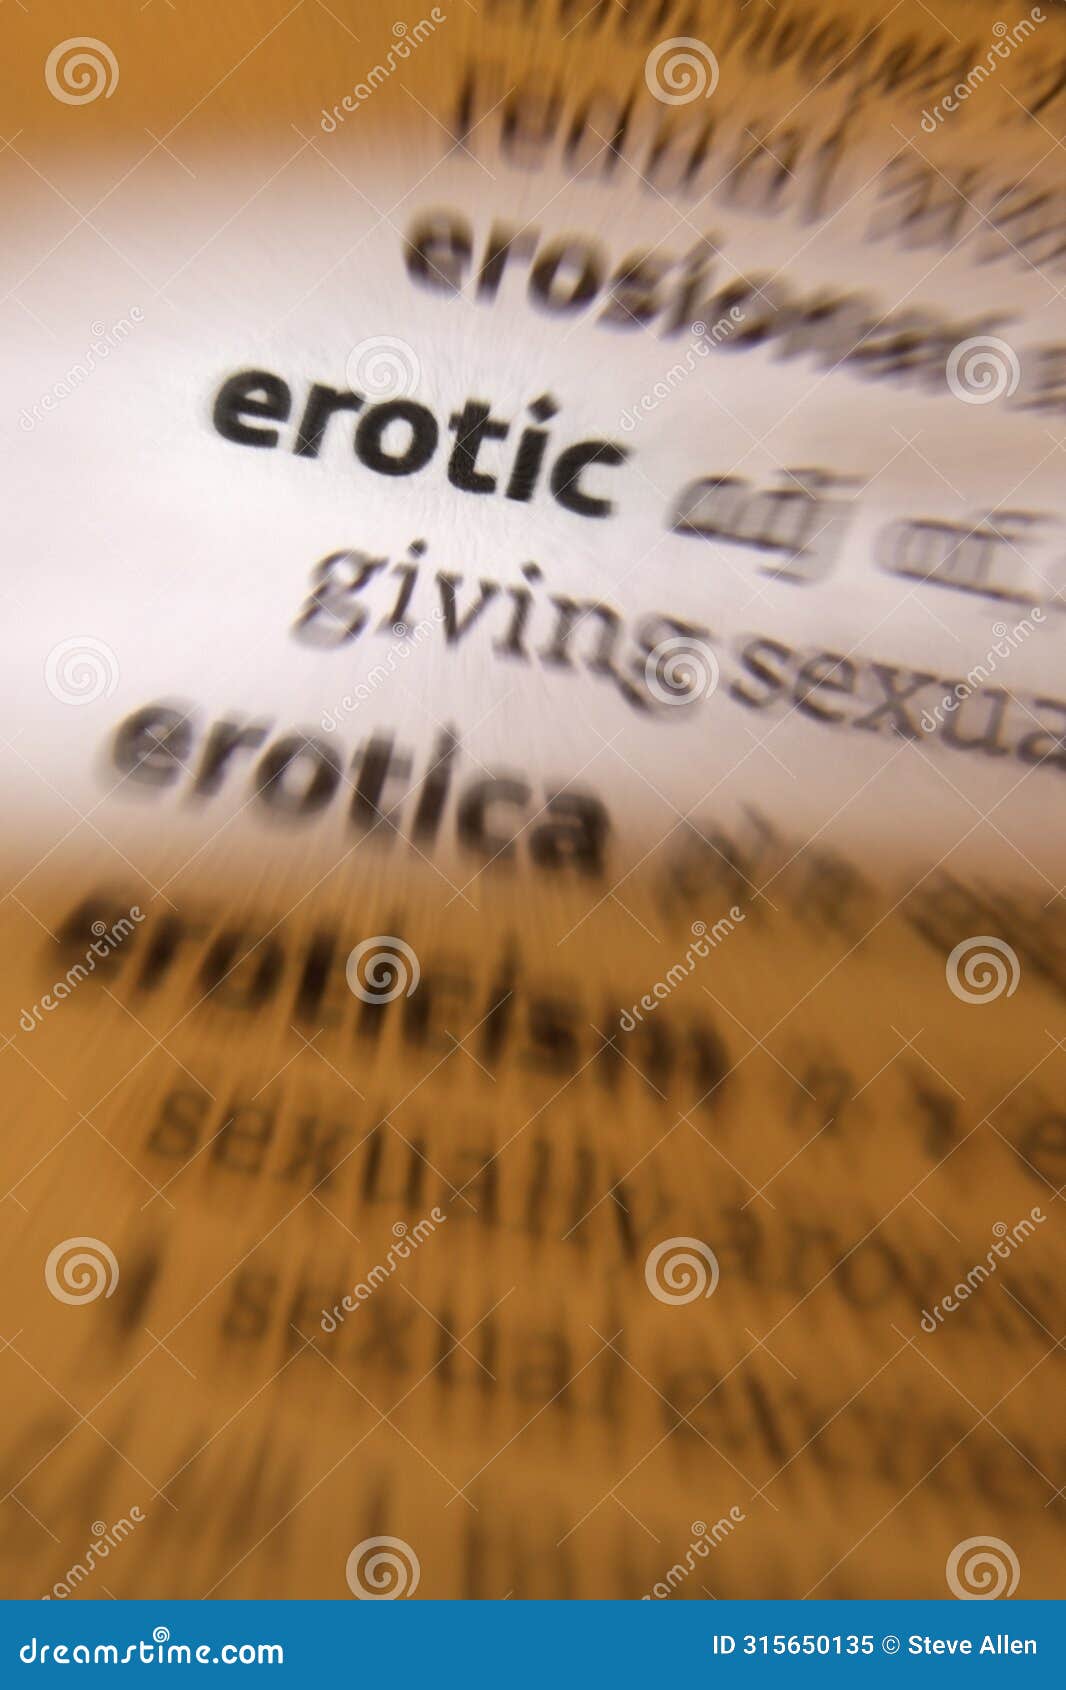 erotic - eroticism and sensuality